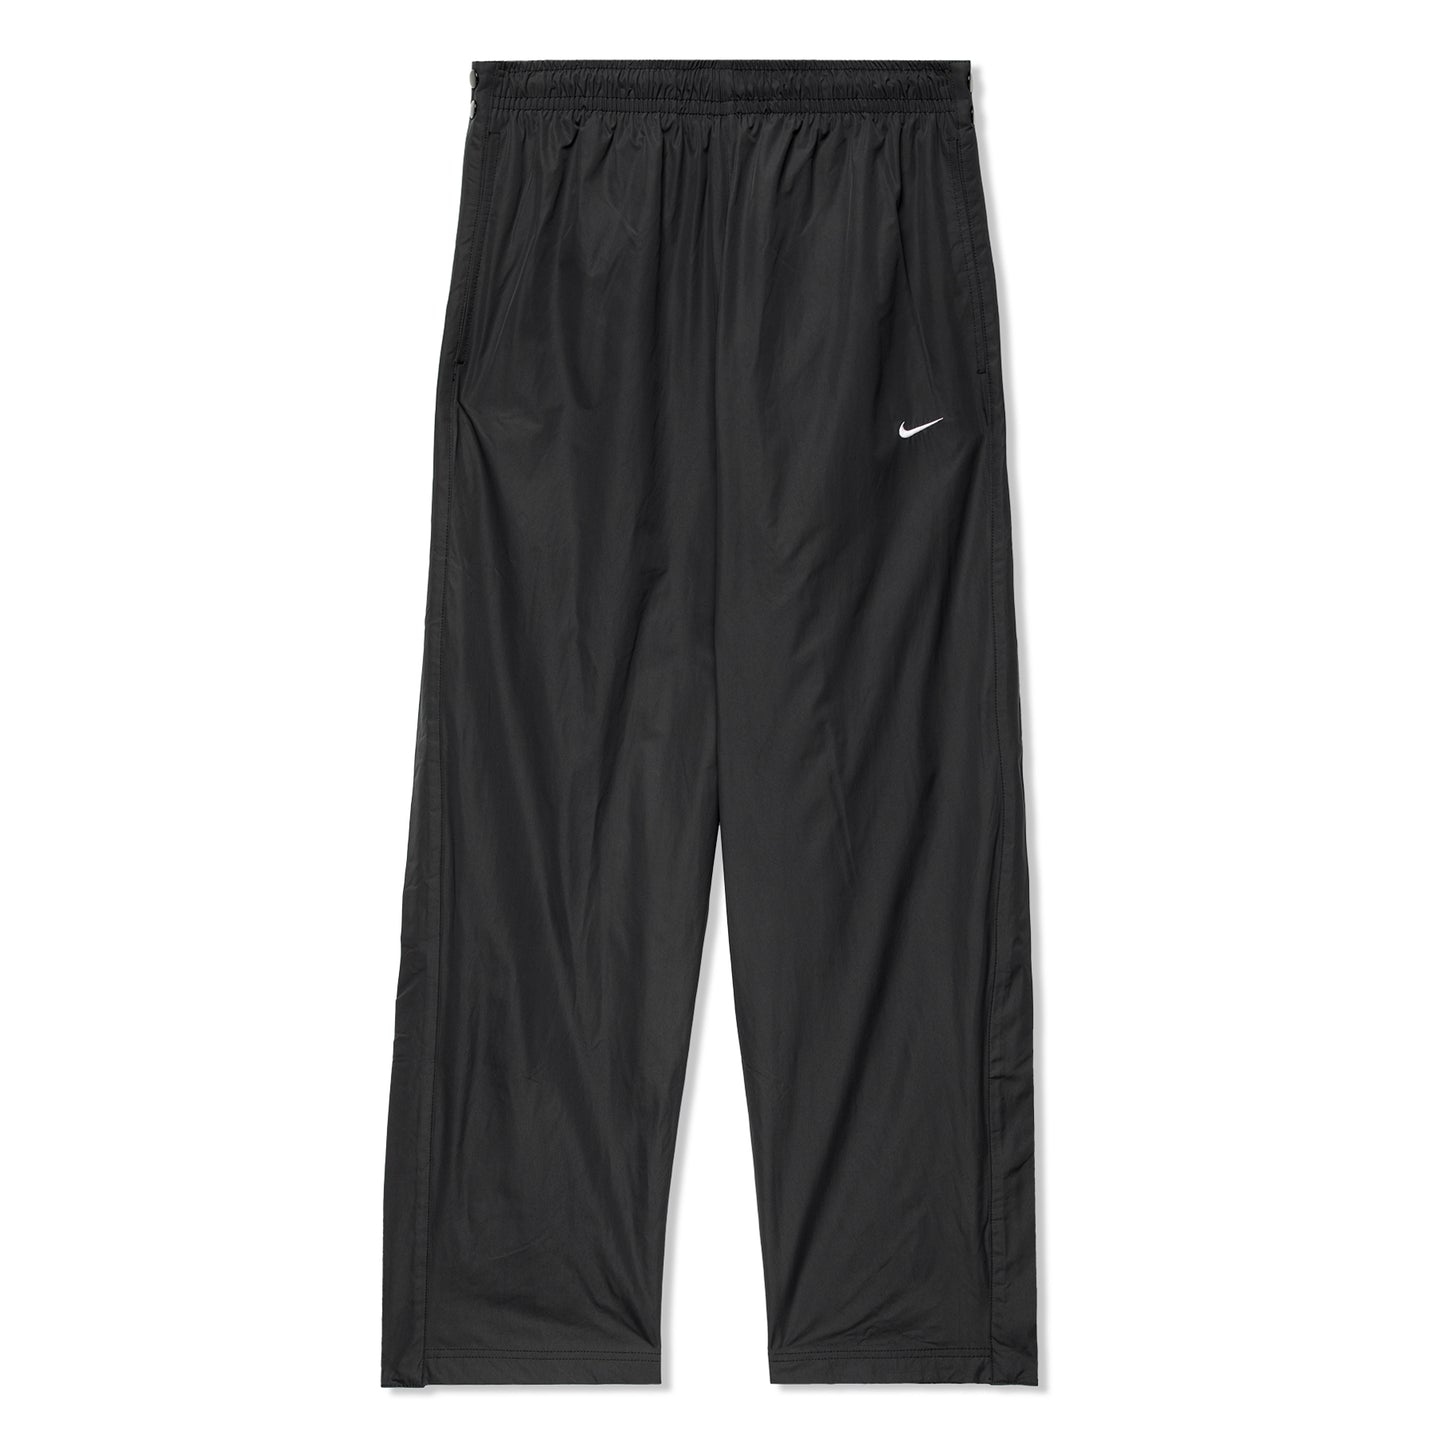 Nike Authentics Tear-Away Pants (Black/White)